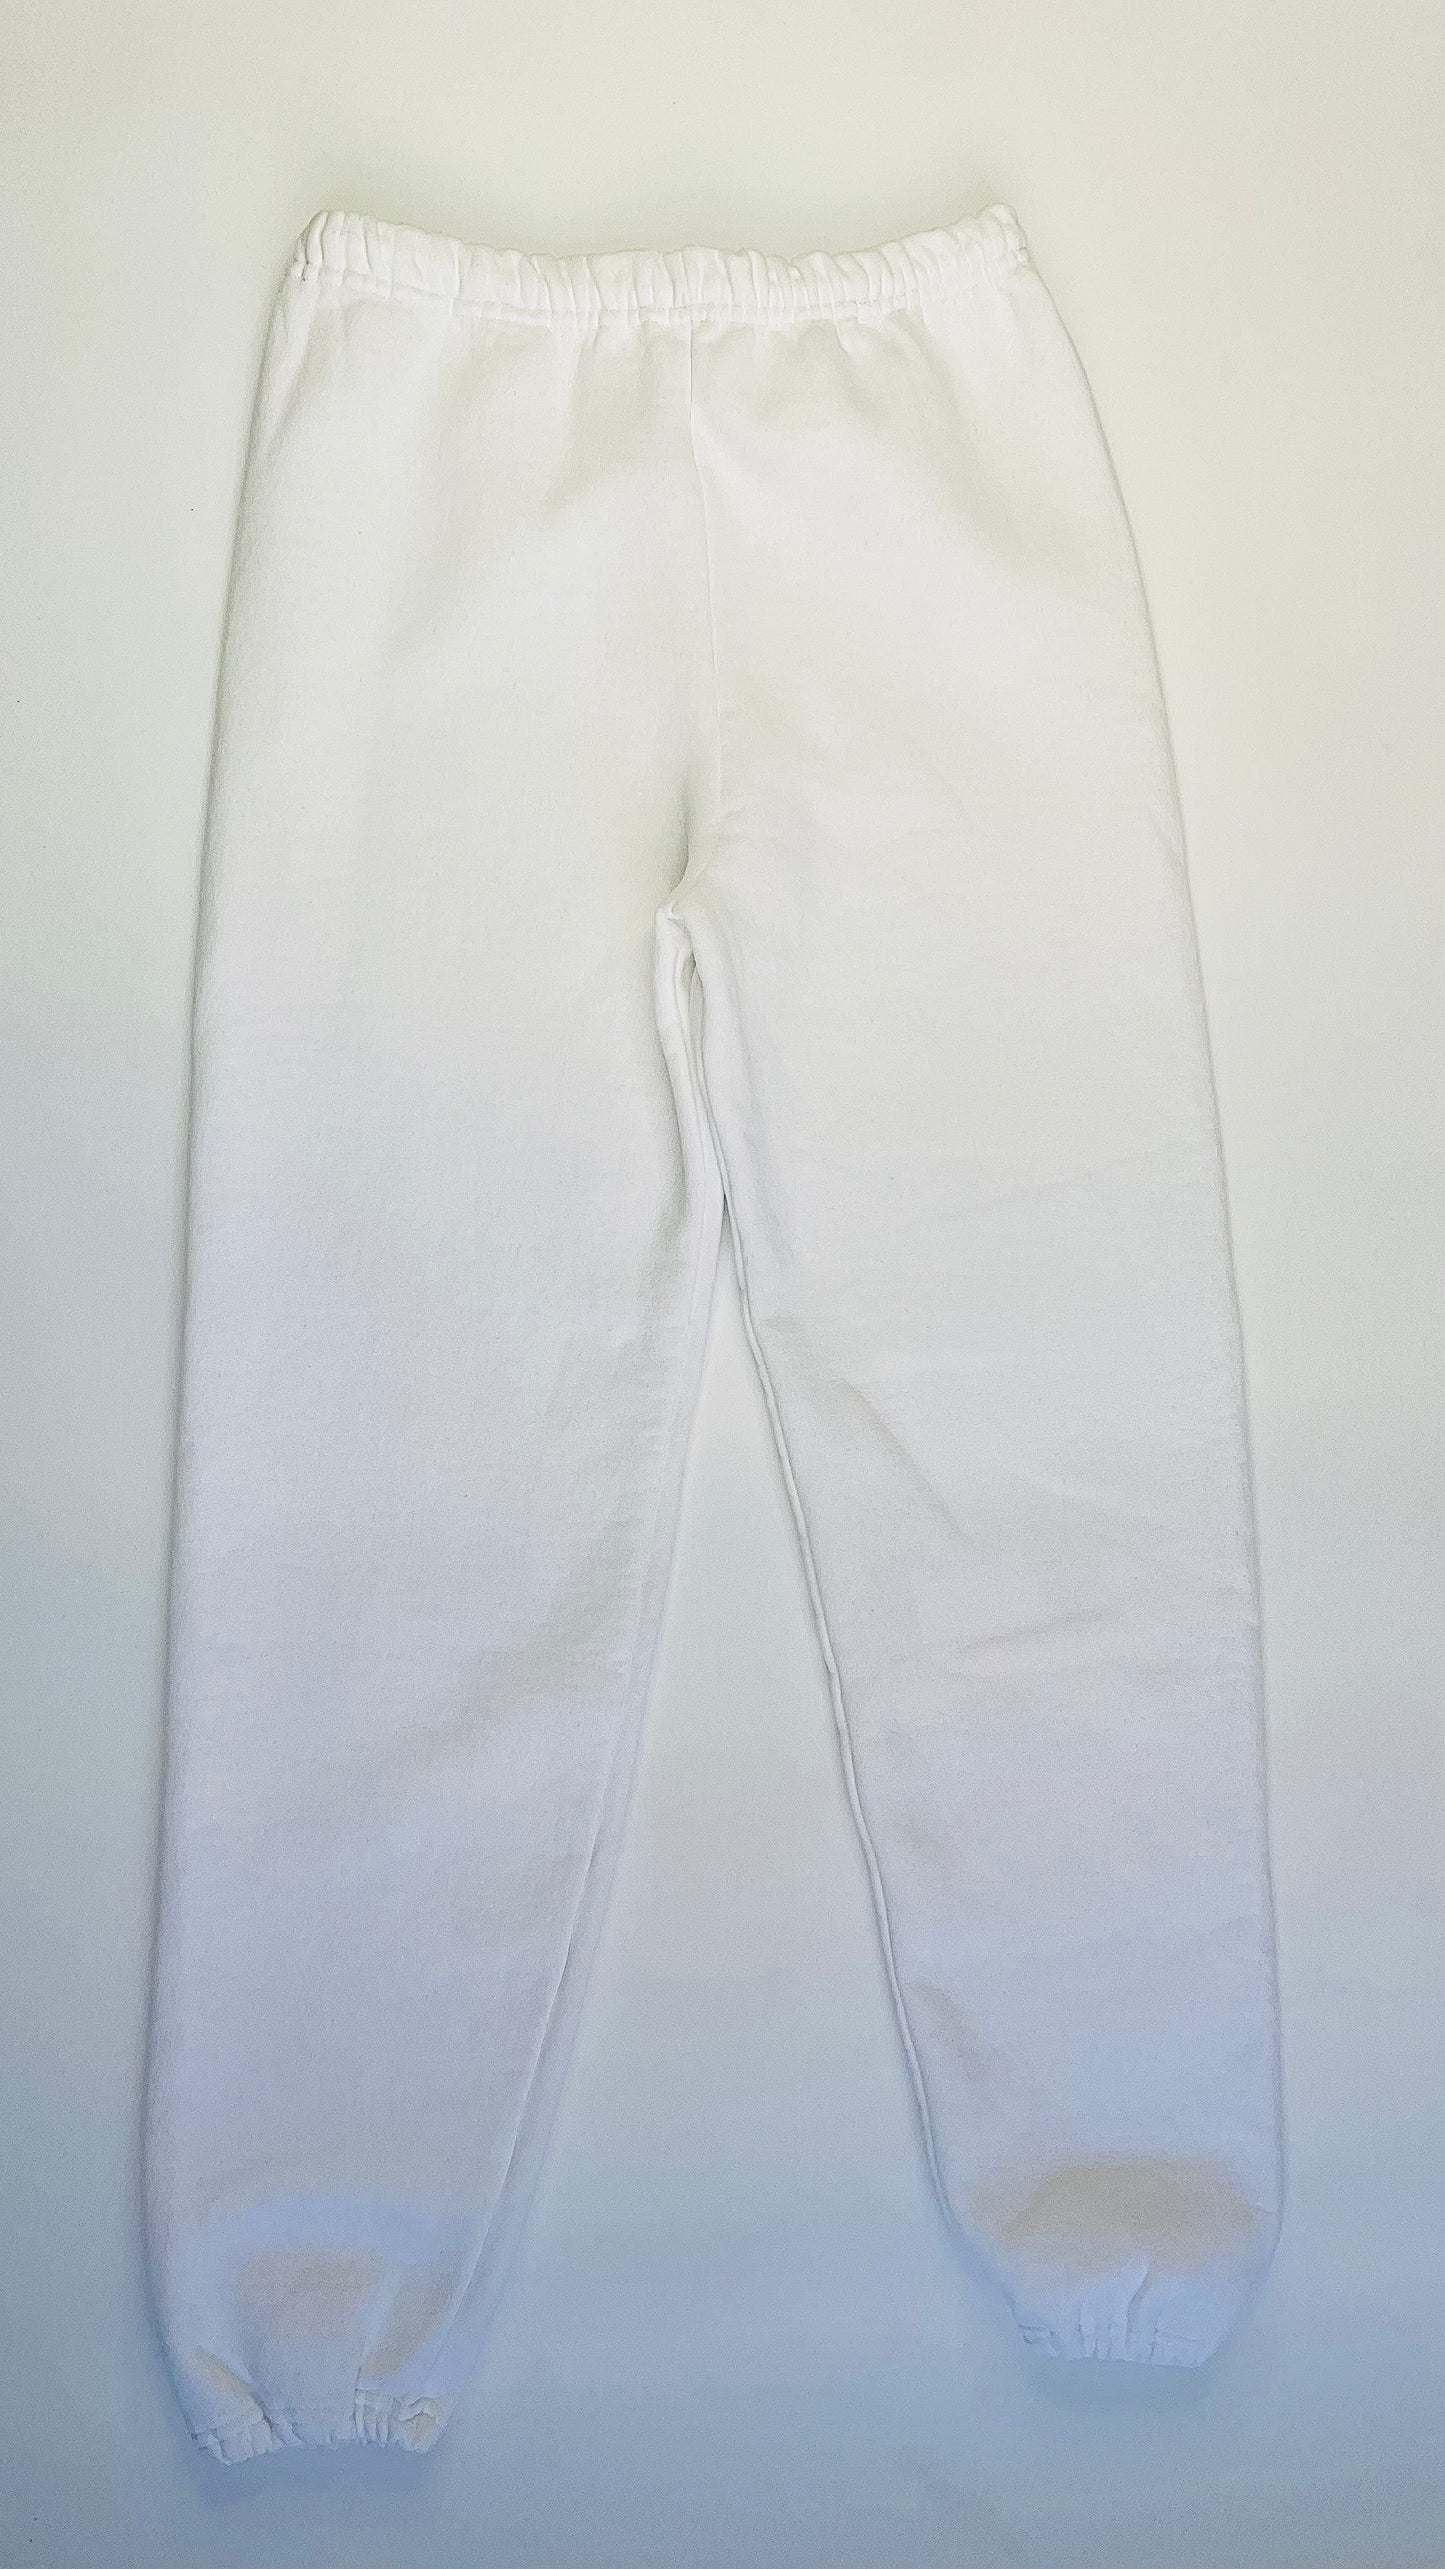 Vintage 80s Russell Athletics white sweatpants - Size L